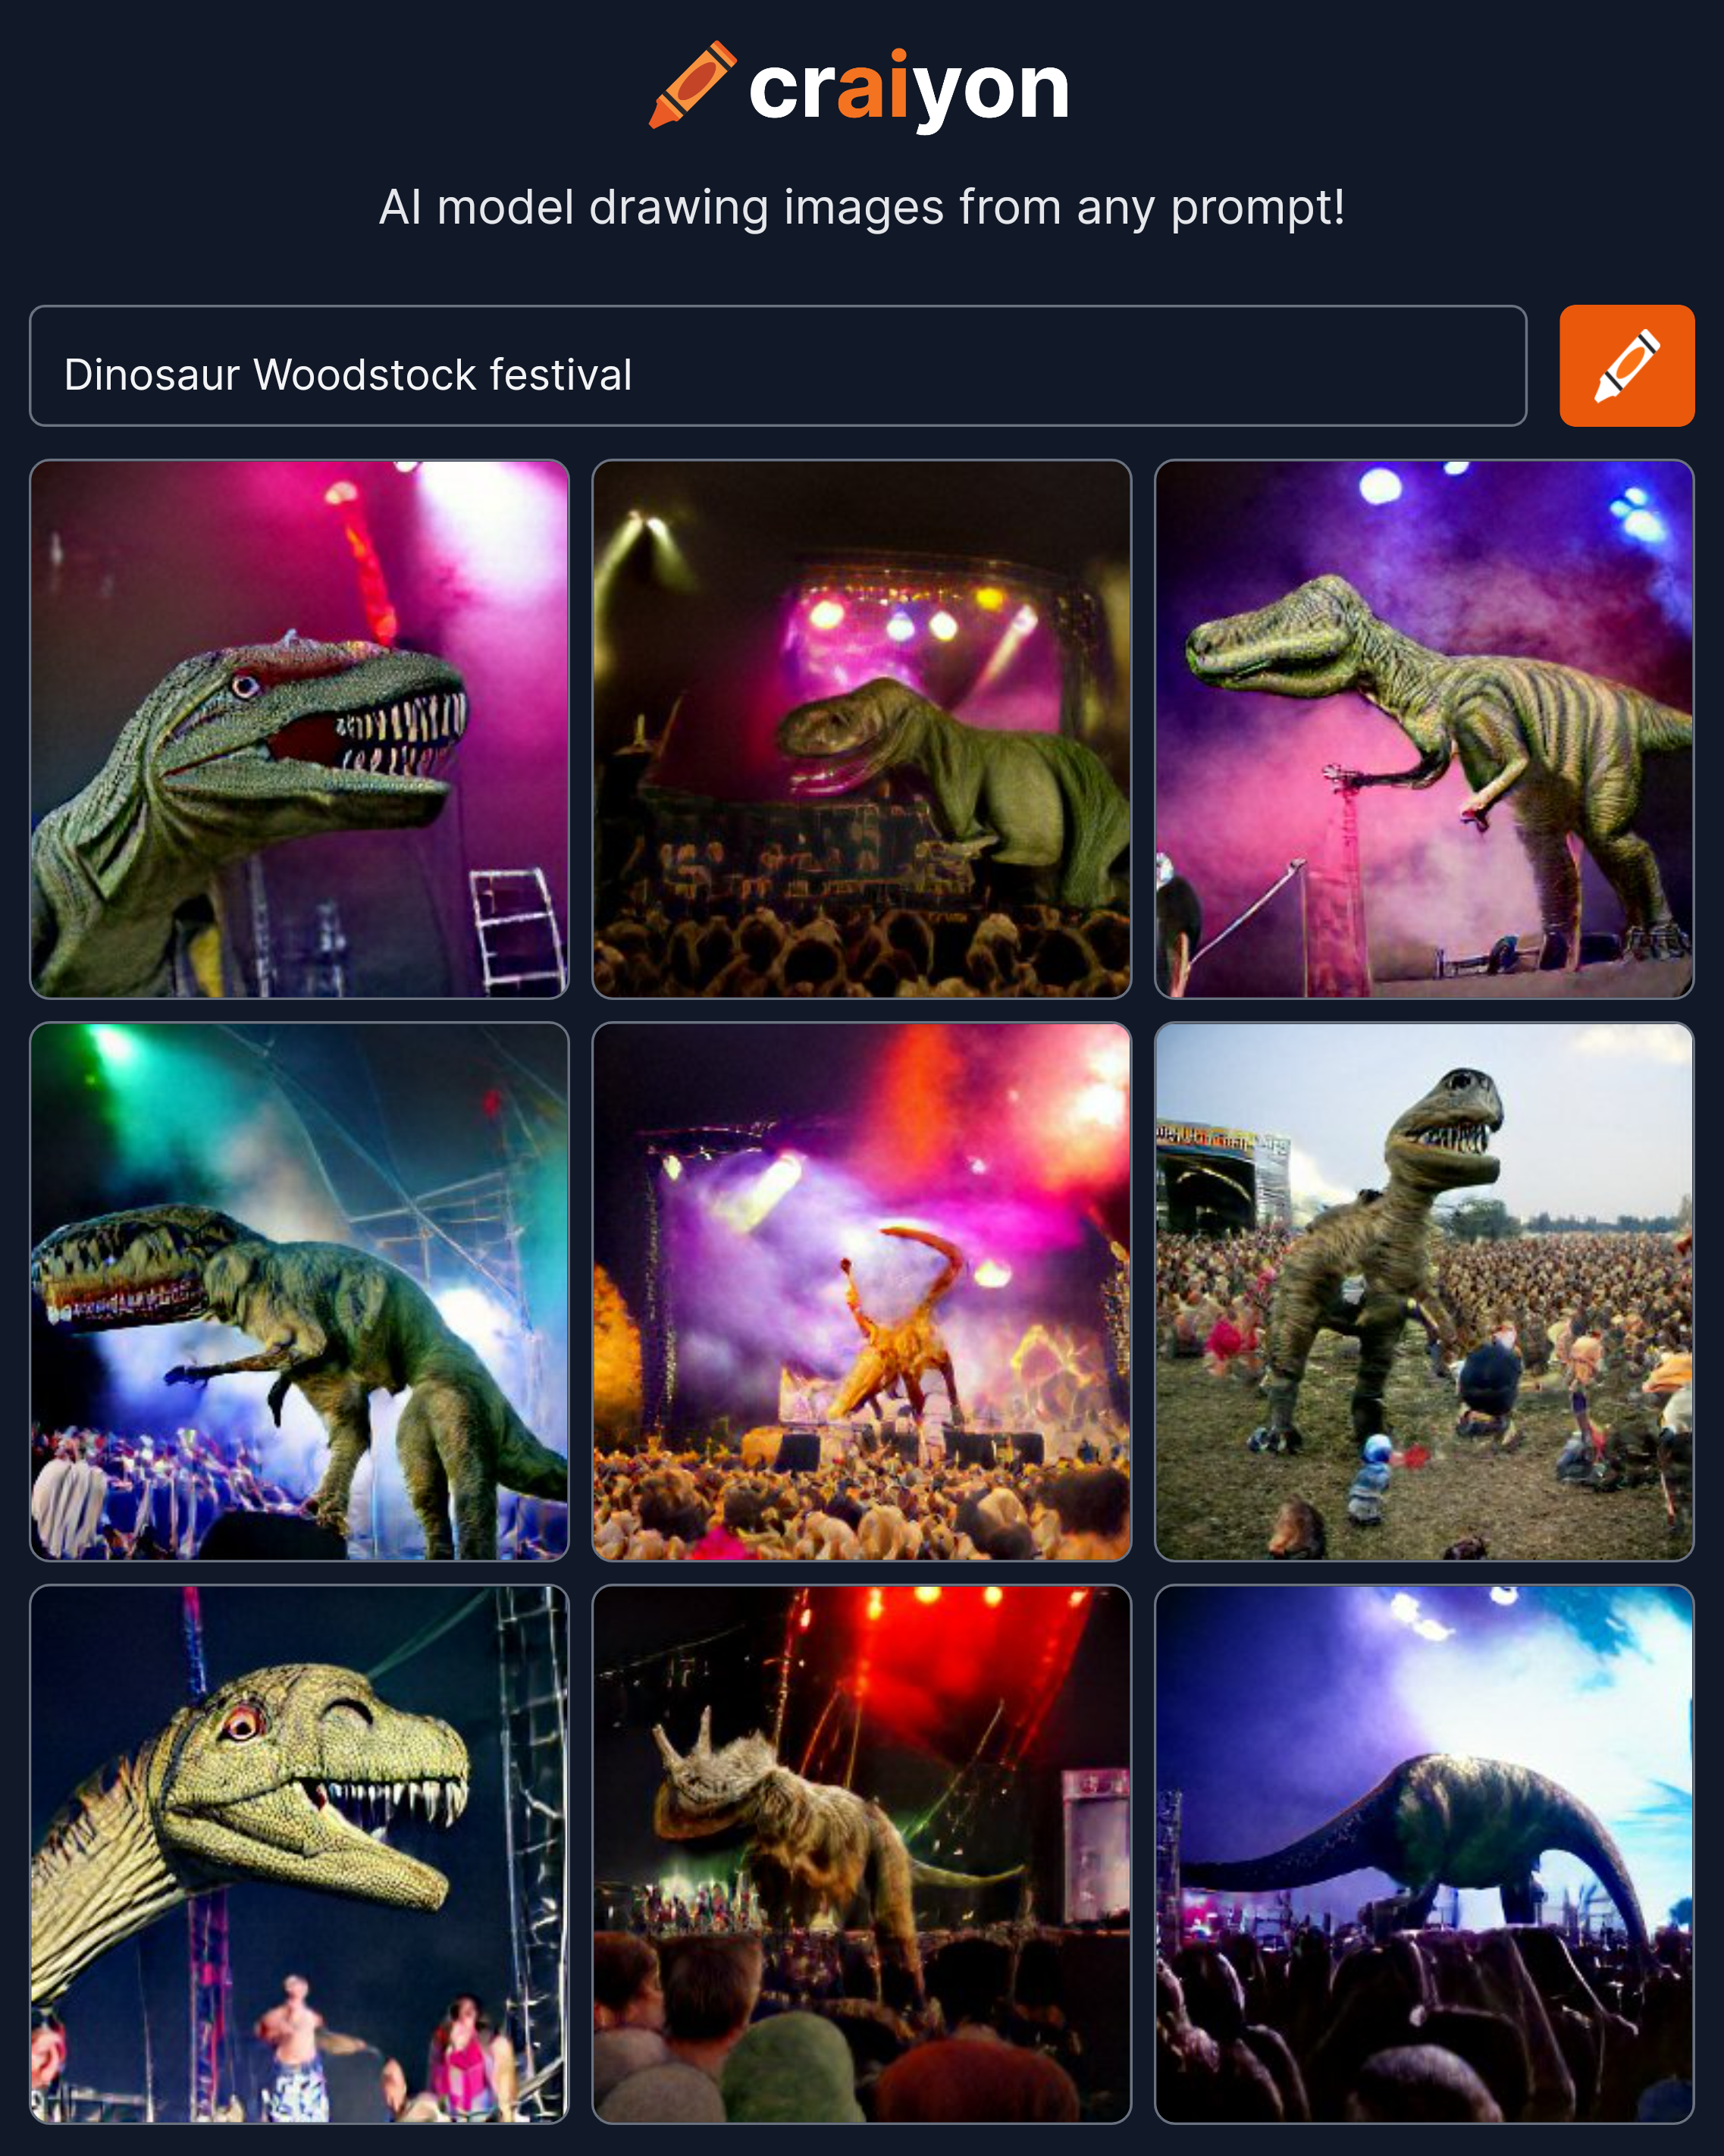 craiyon_000708_Dinosaur_Woodstock_festival.png